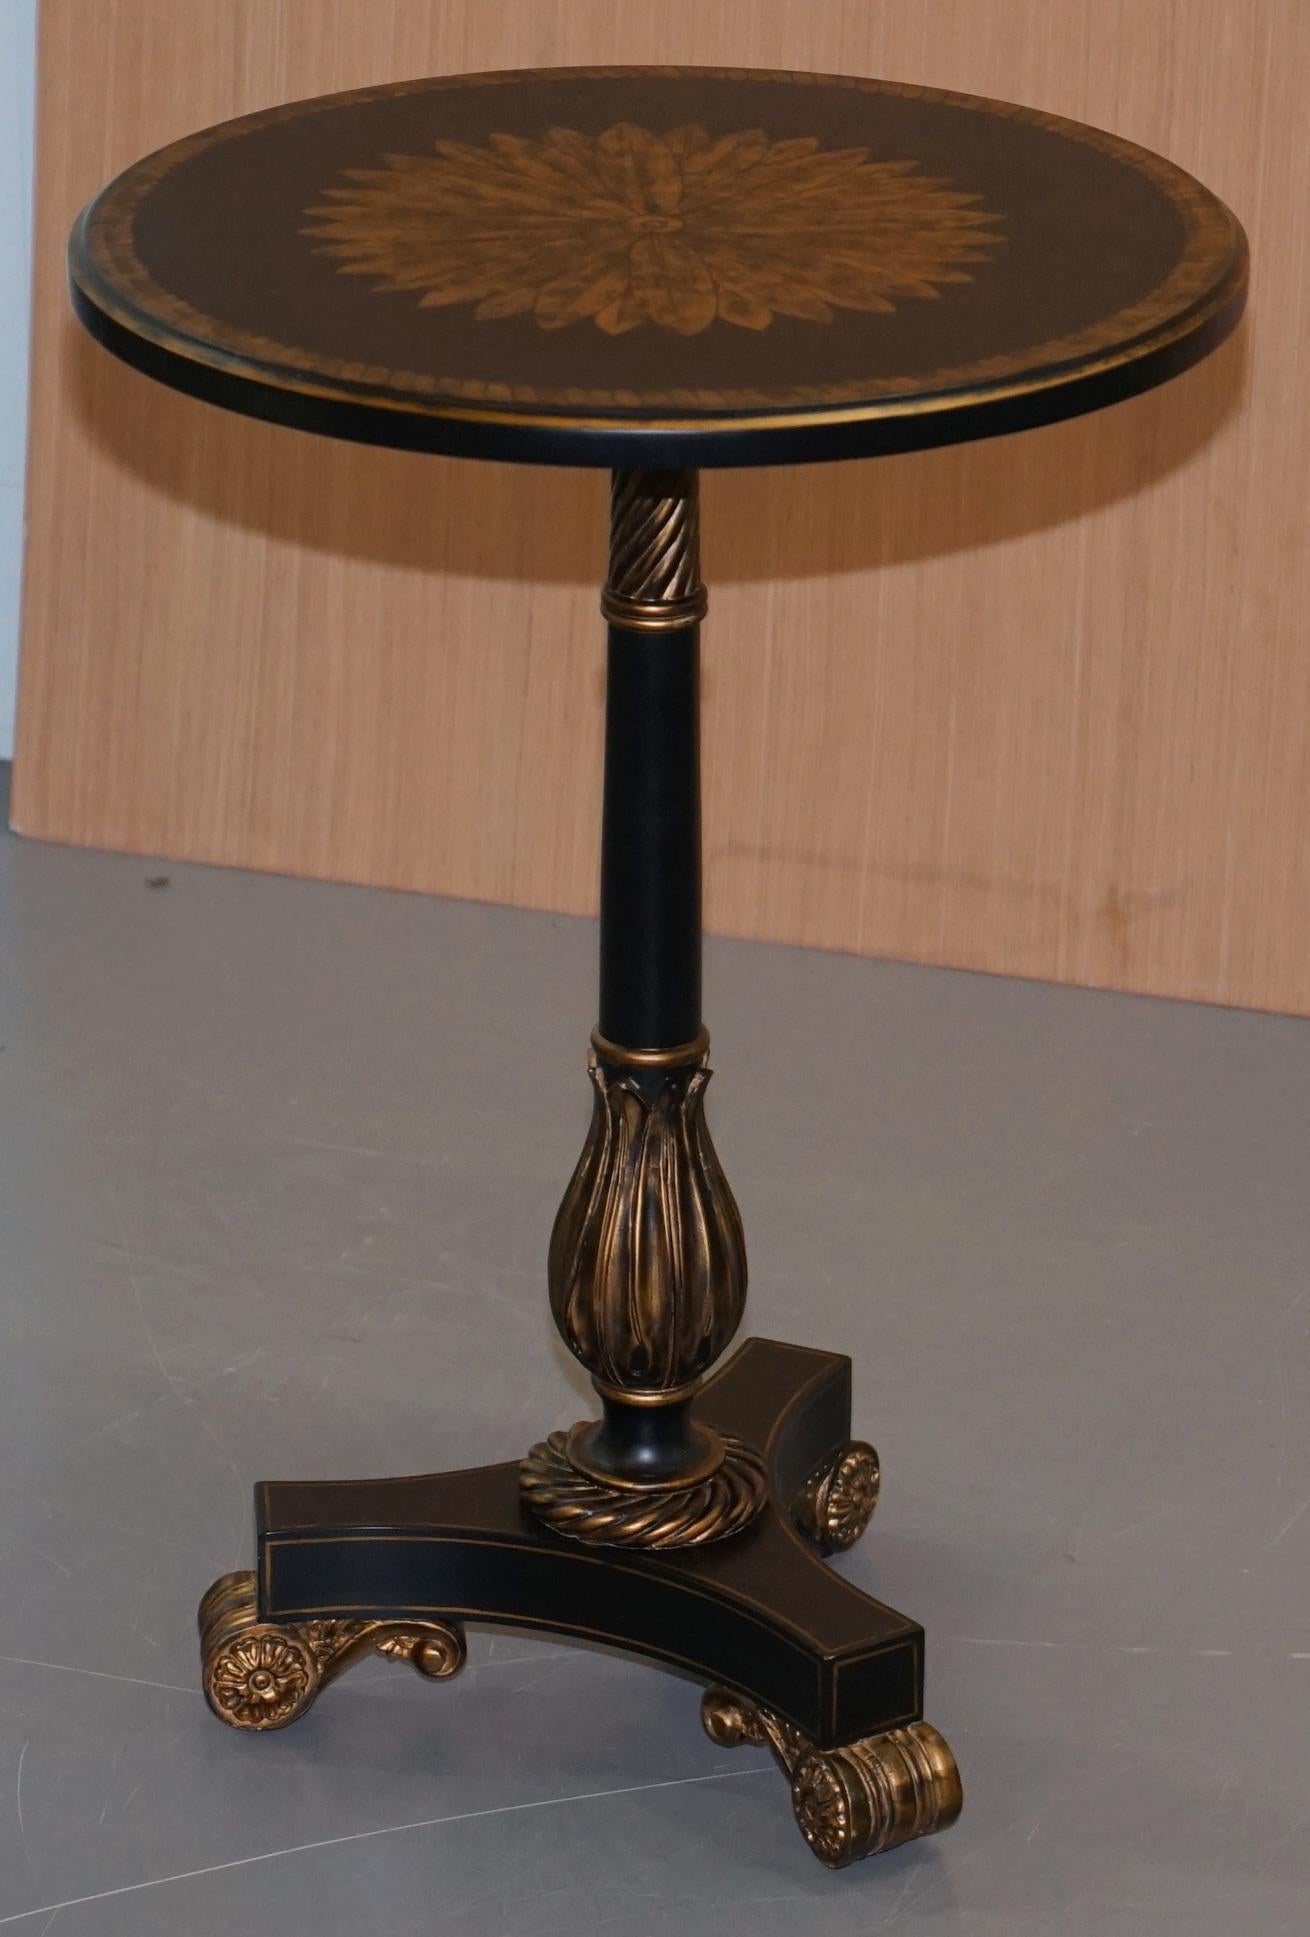 Modern Maitland-Smith Ebsonised Sunburst Side Lamp End Wine Table Stunning Black Gold